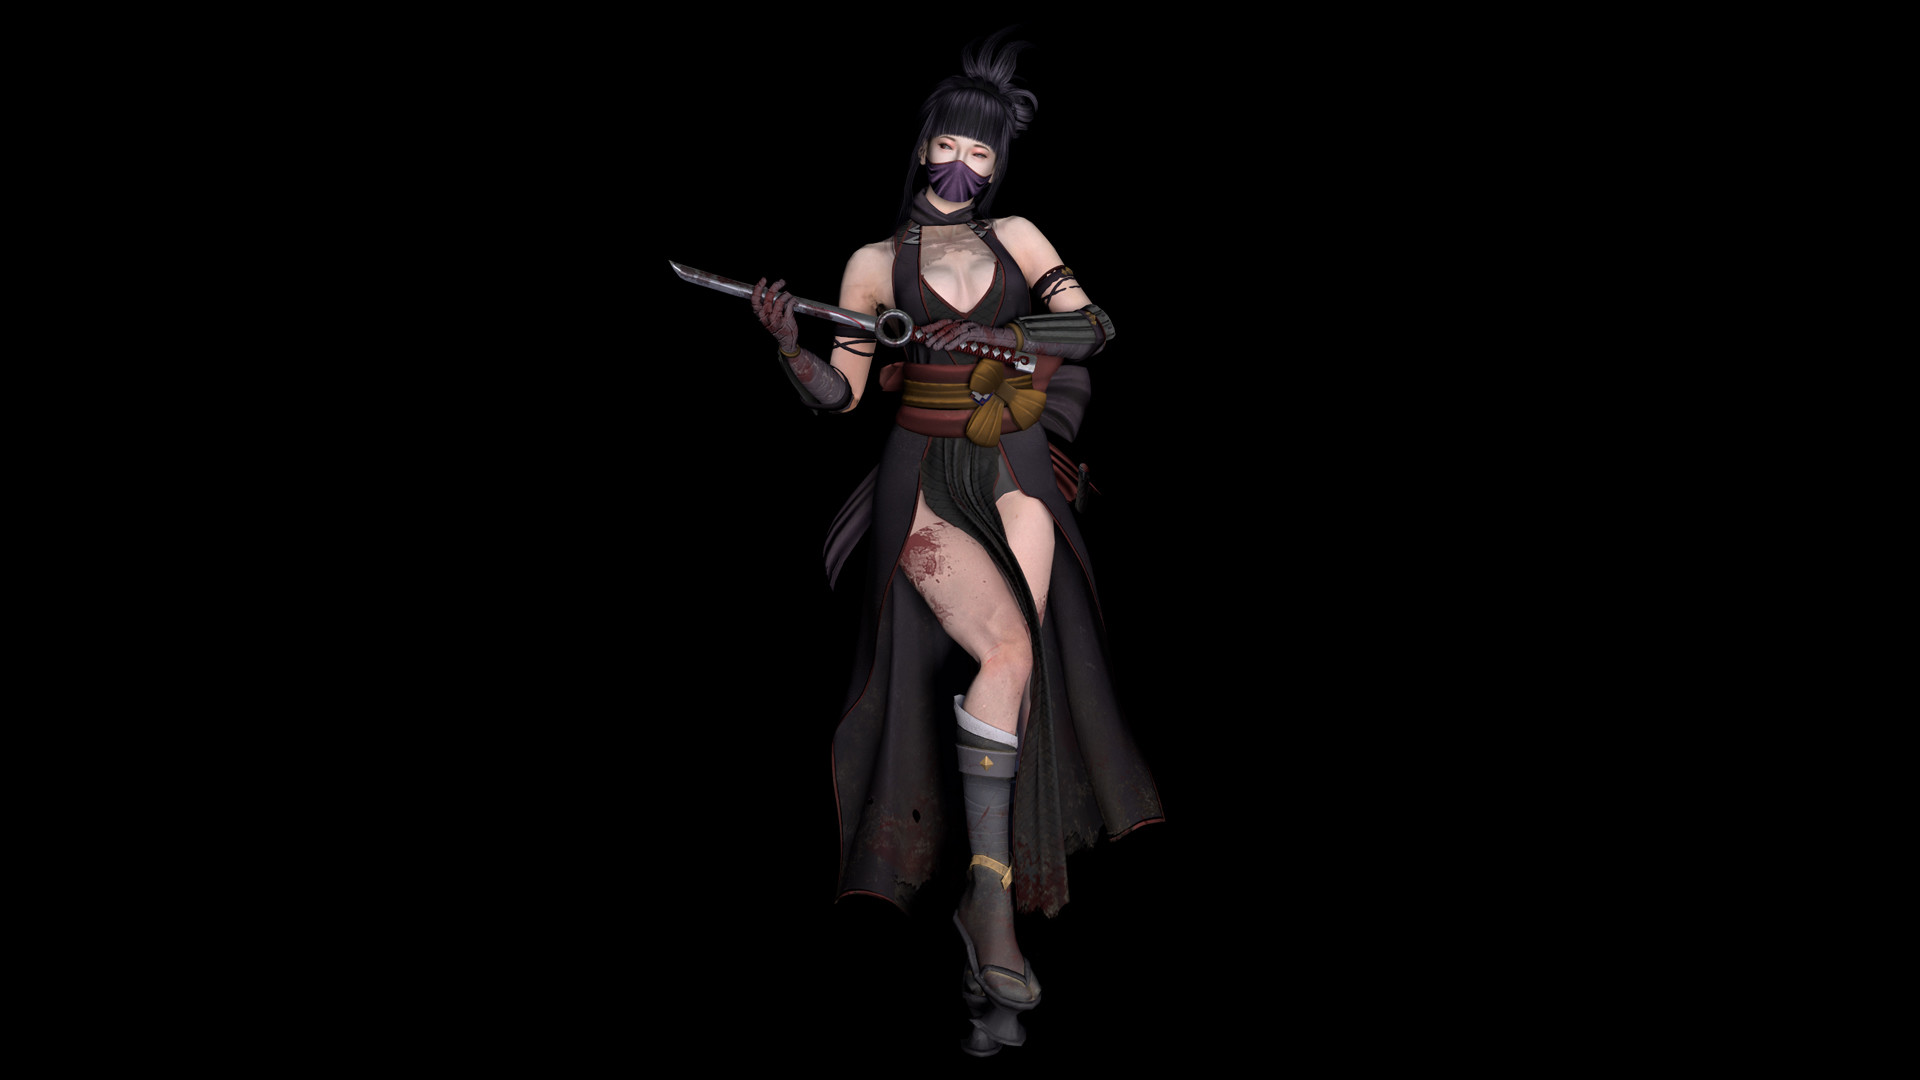 Soul at Stake - "Kunoichi" The Geisha's Outfit screenshot